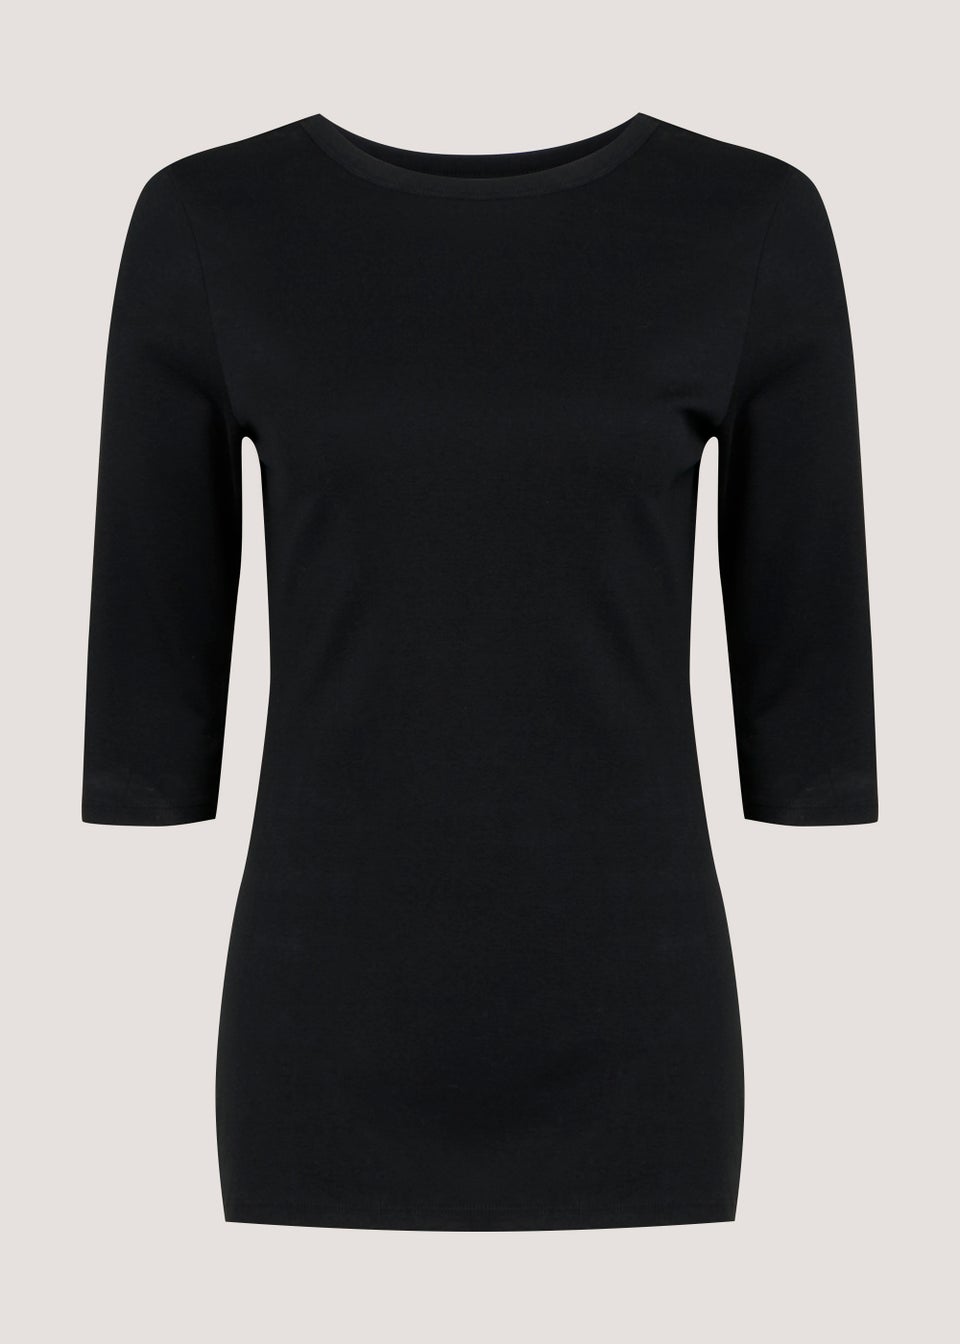 Black 3/4 Sleeve T-Shirt